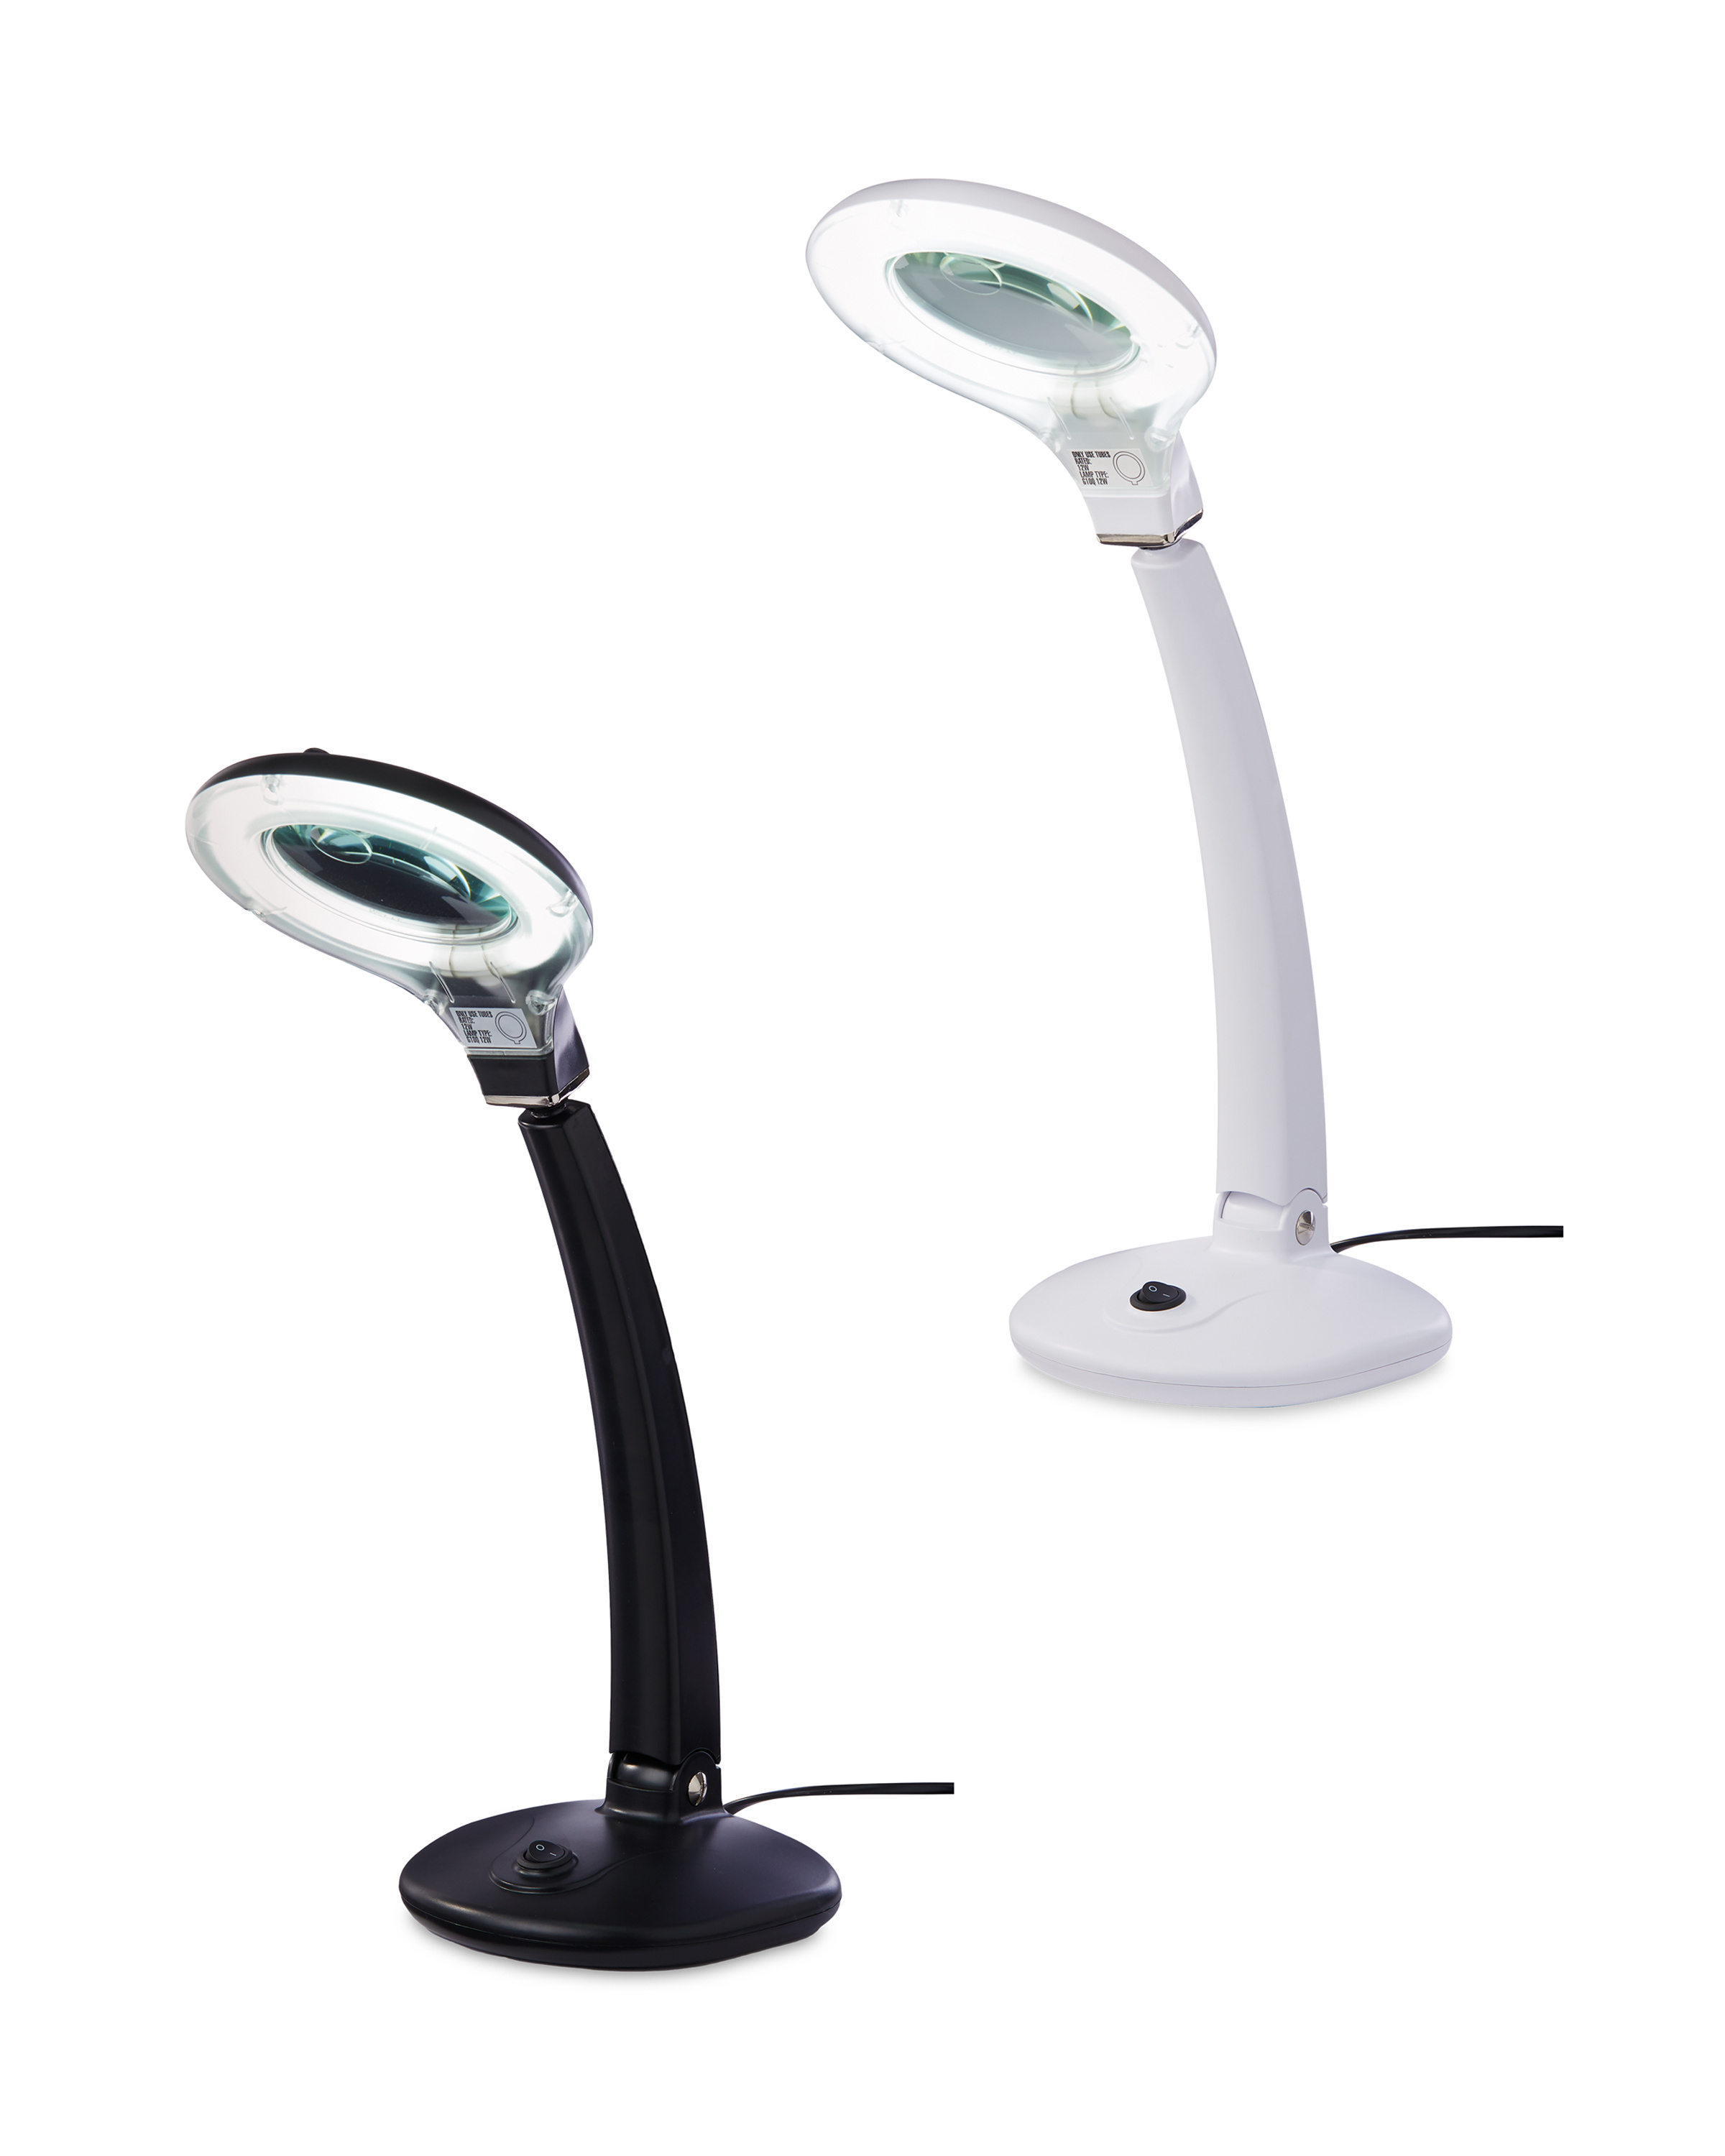 Lifemax Magnifying Table Light Aldi Uk, Magnifying Table Lamp Aldi